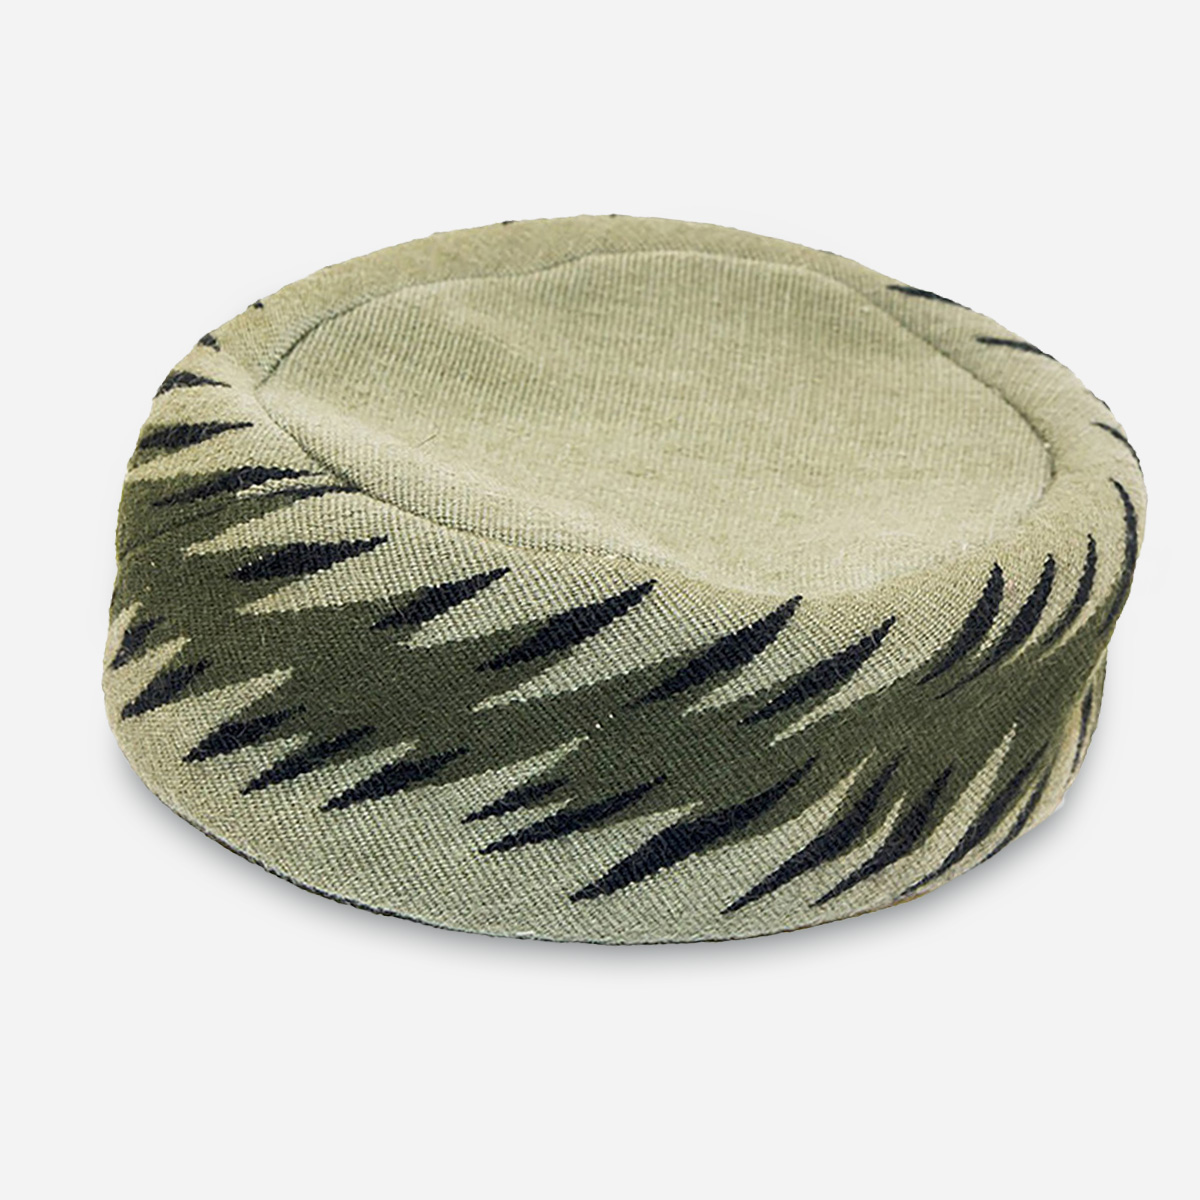 Green tapestry hat, vintage pillbox